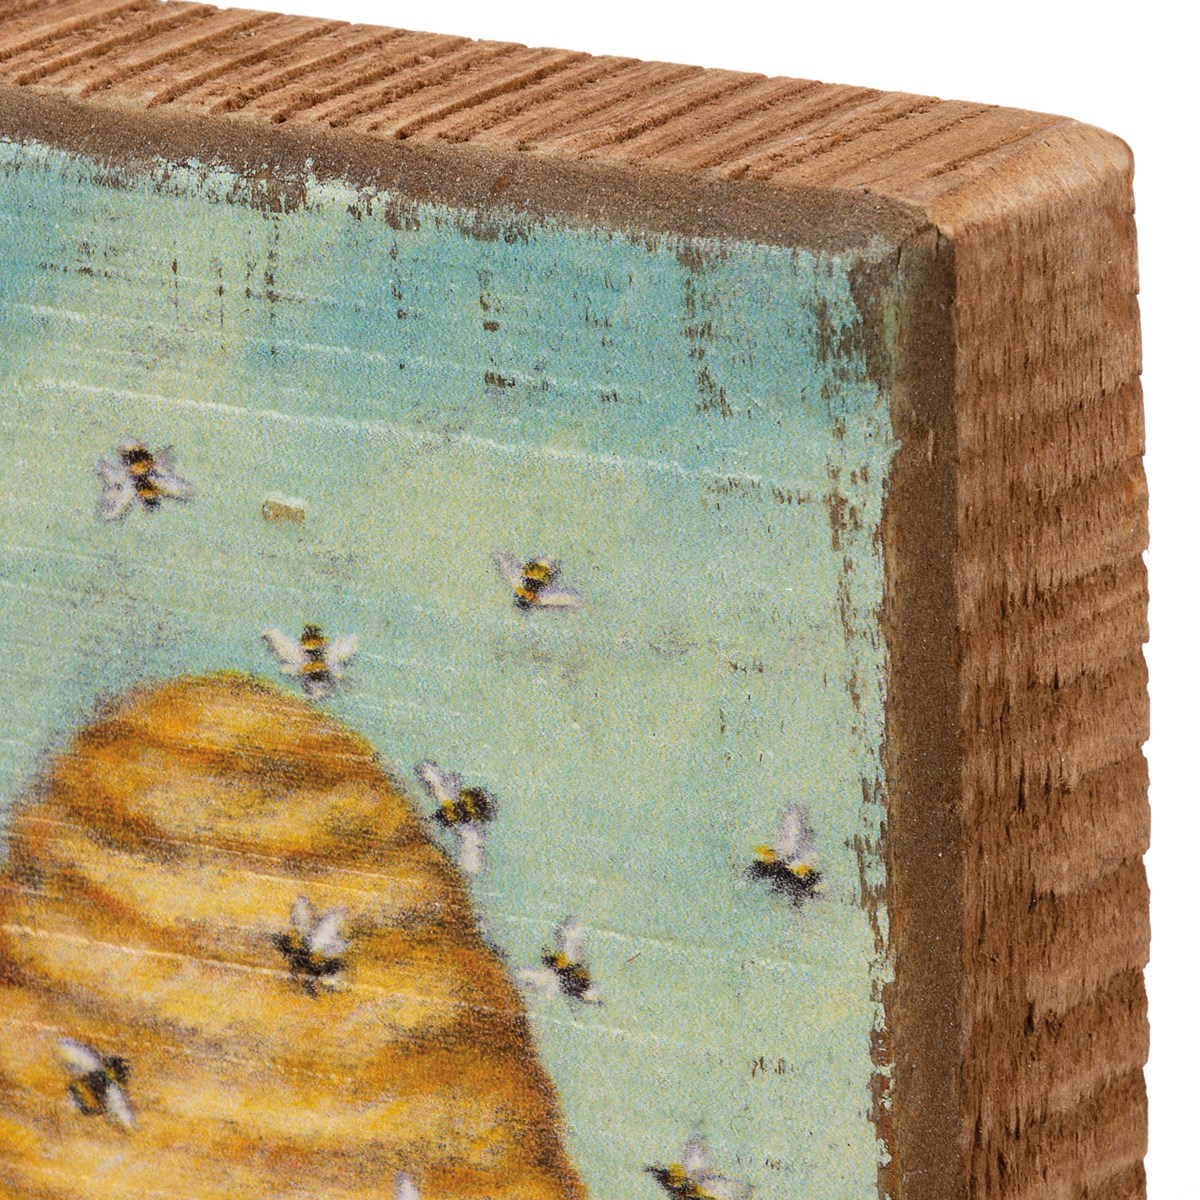 Block Sign - Bees Buzz Bee Honey Farm - 6" x 4.75" x 1" - Wood